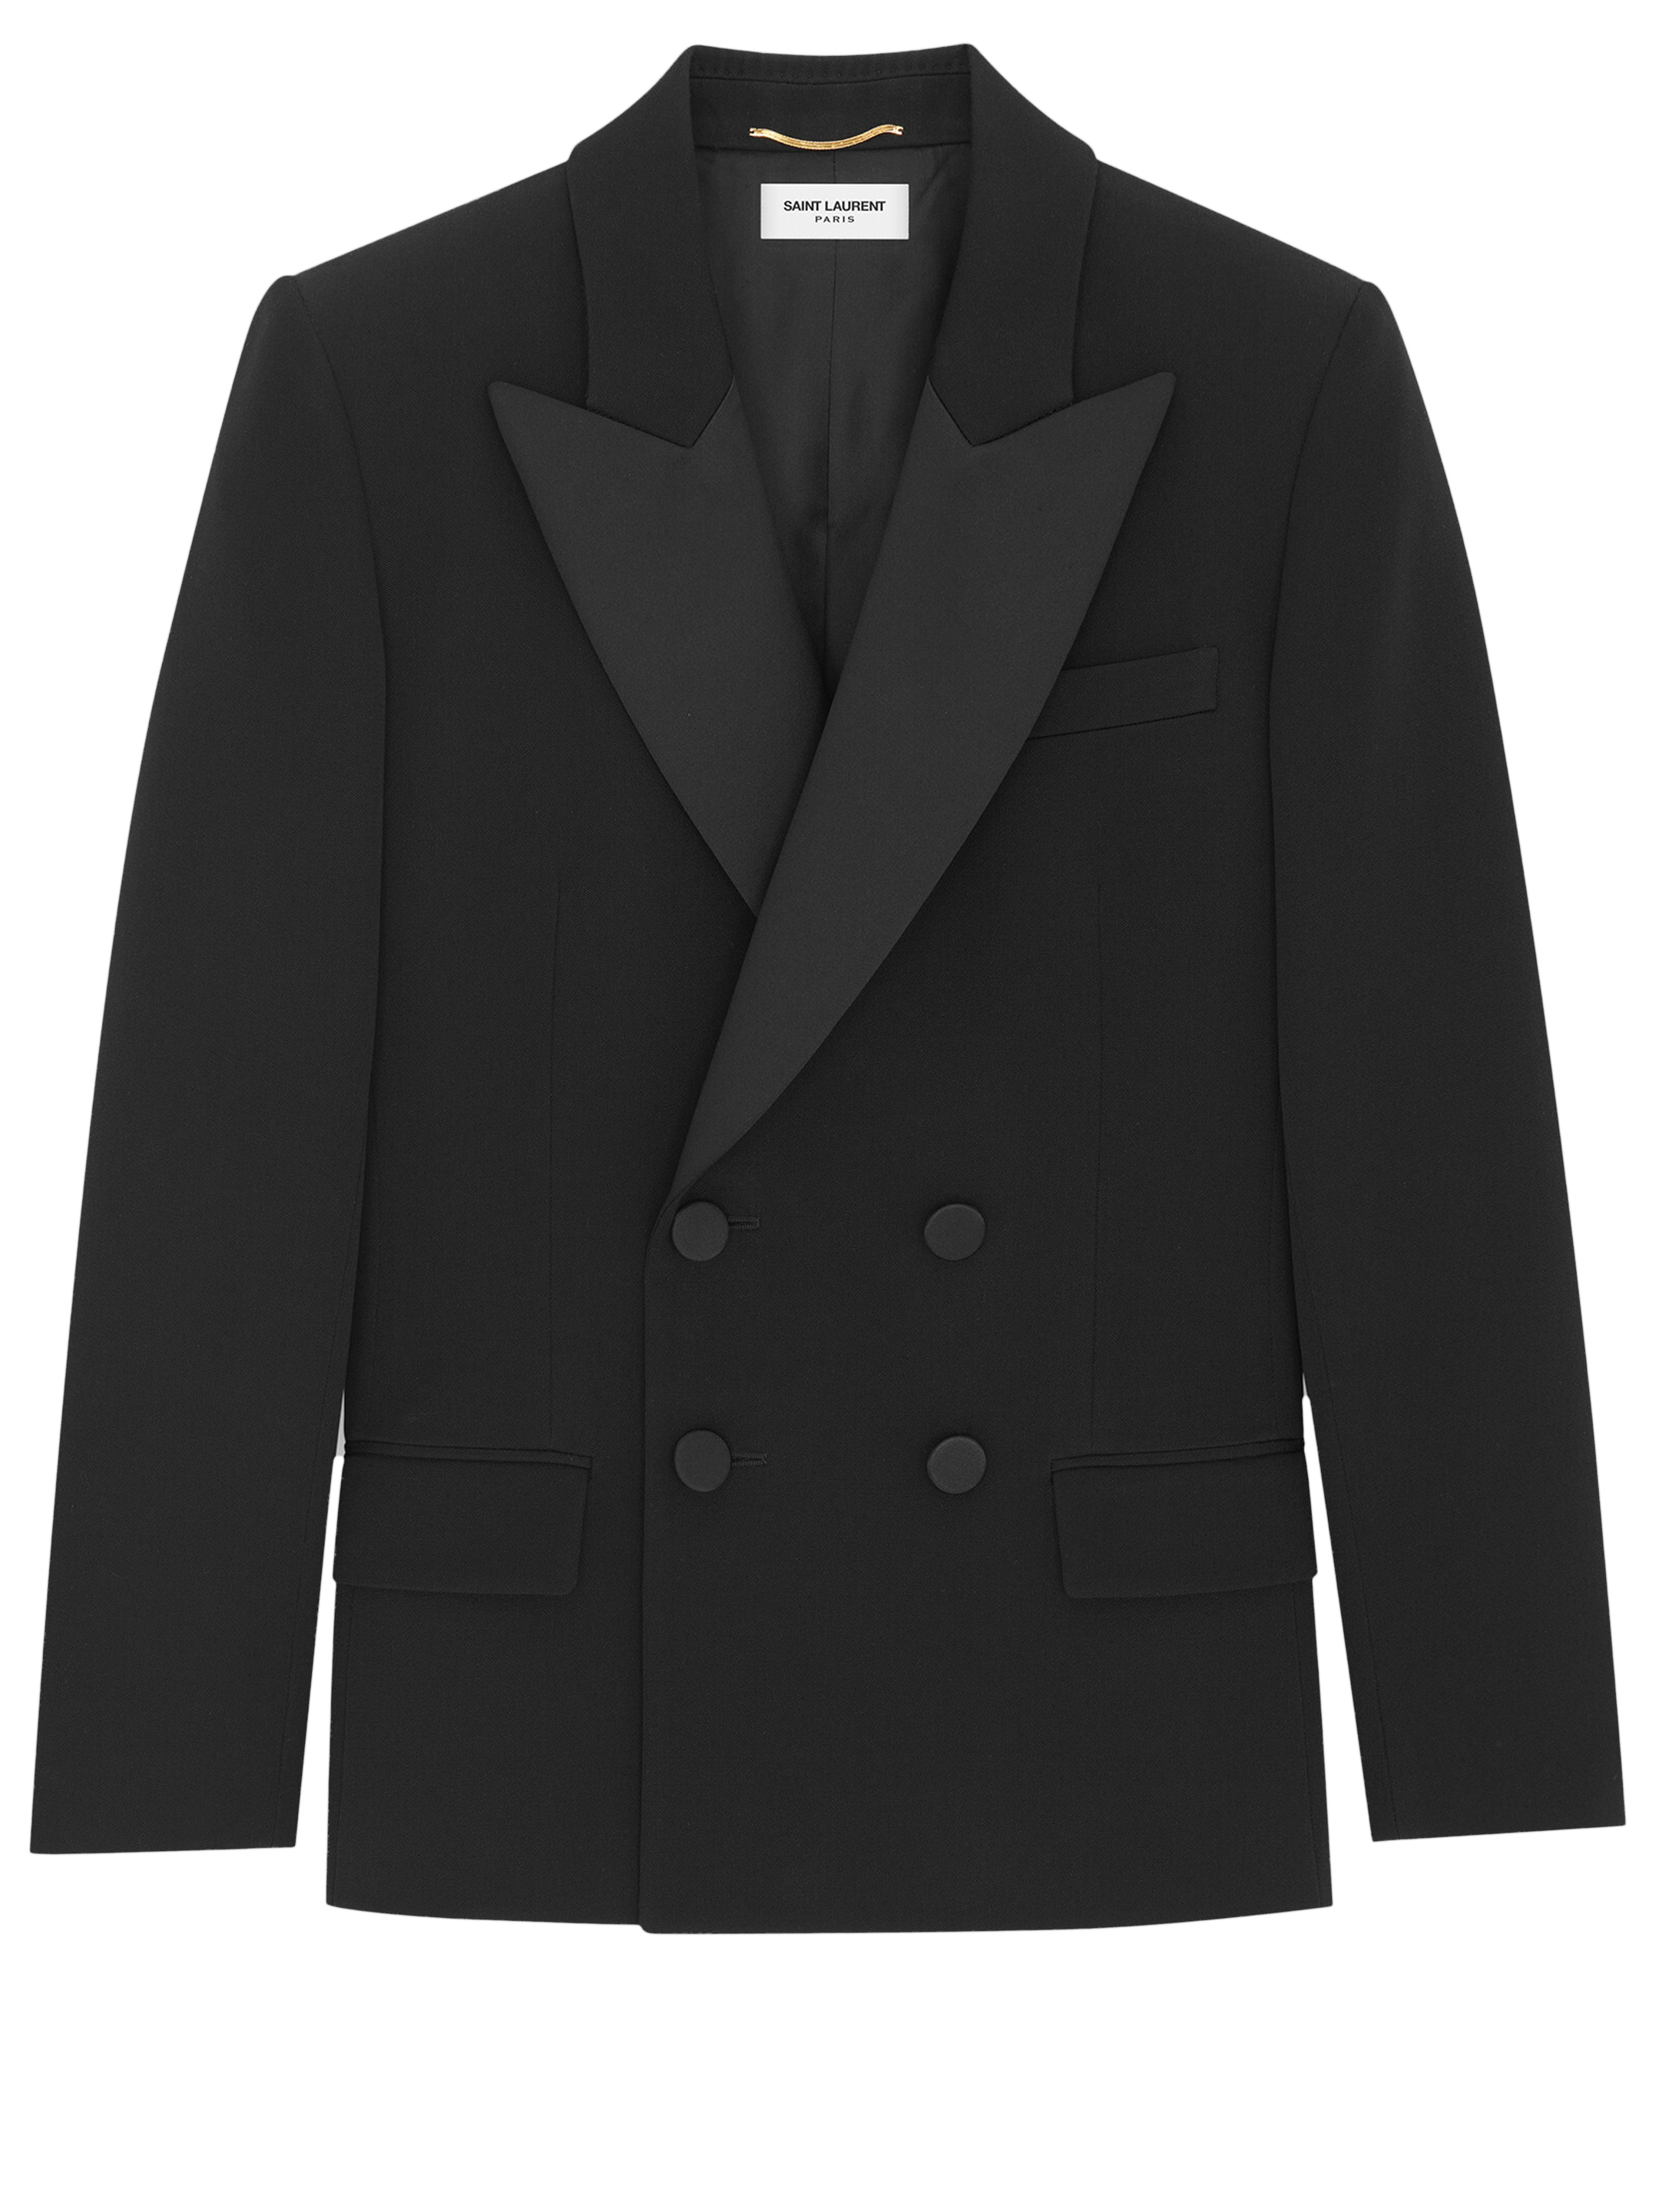 Куртка Saint Laurent Tuxedo, черный шелковая пудра miss w pro poudre de soie hd 12 гр